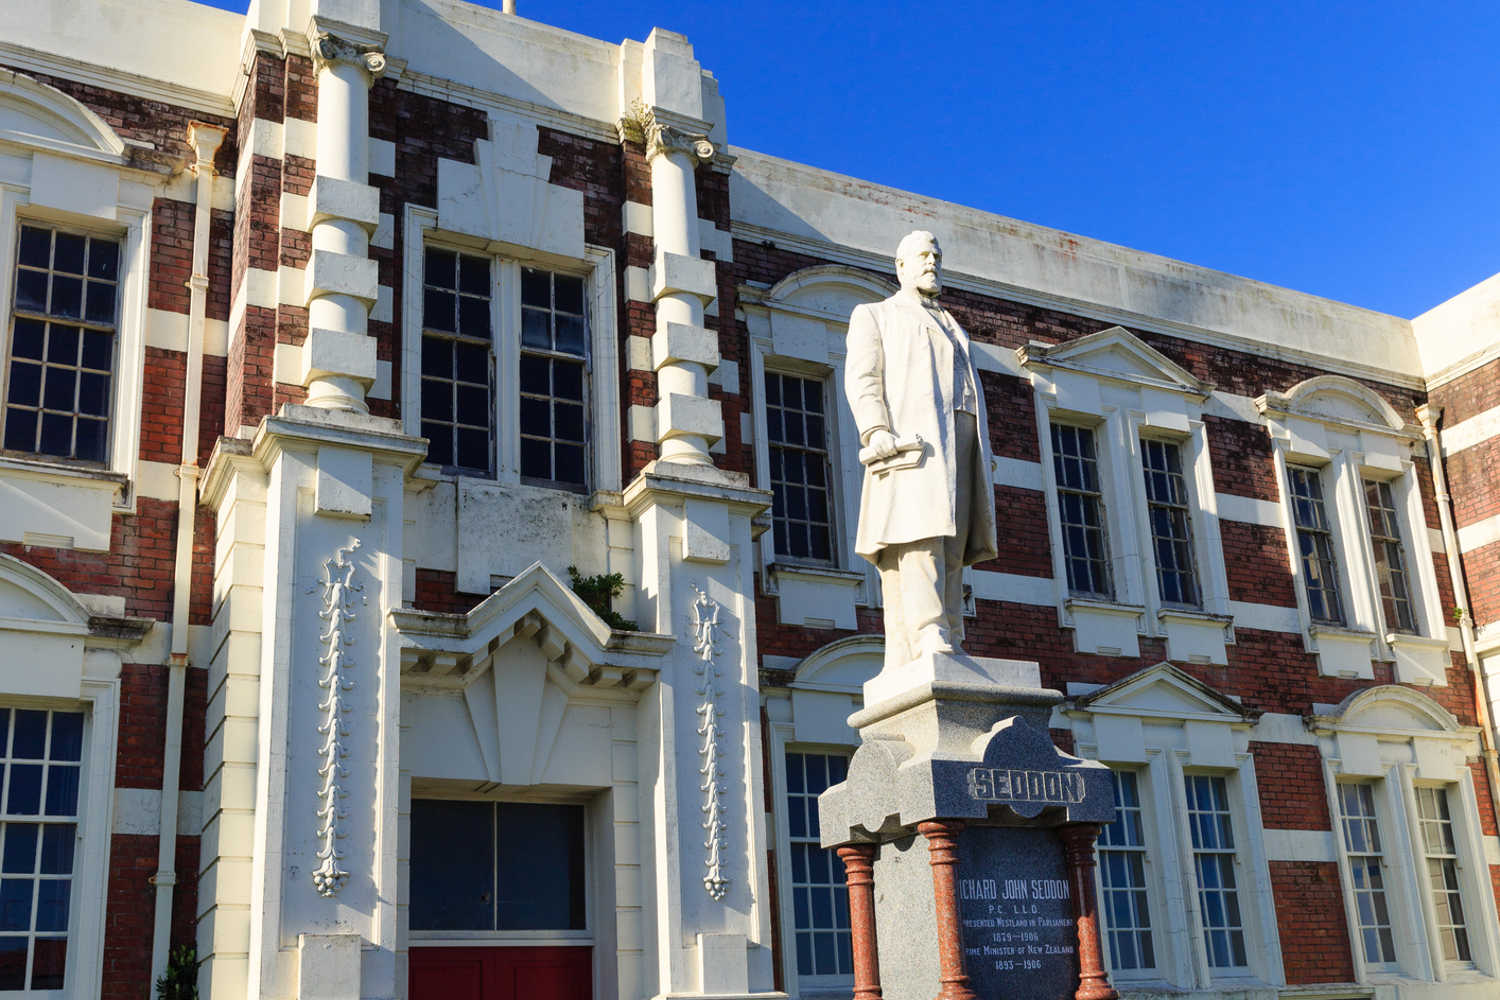 Statue of Â Richard Seddon, outside Hokitika Government Buildings, New Zealand